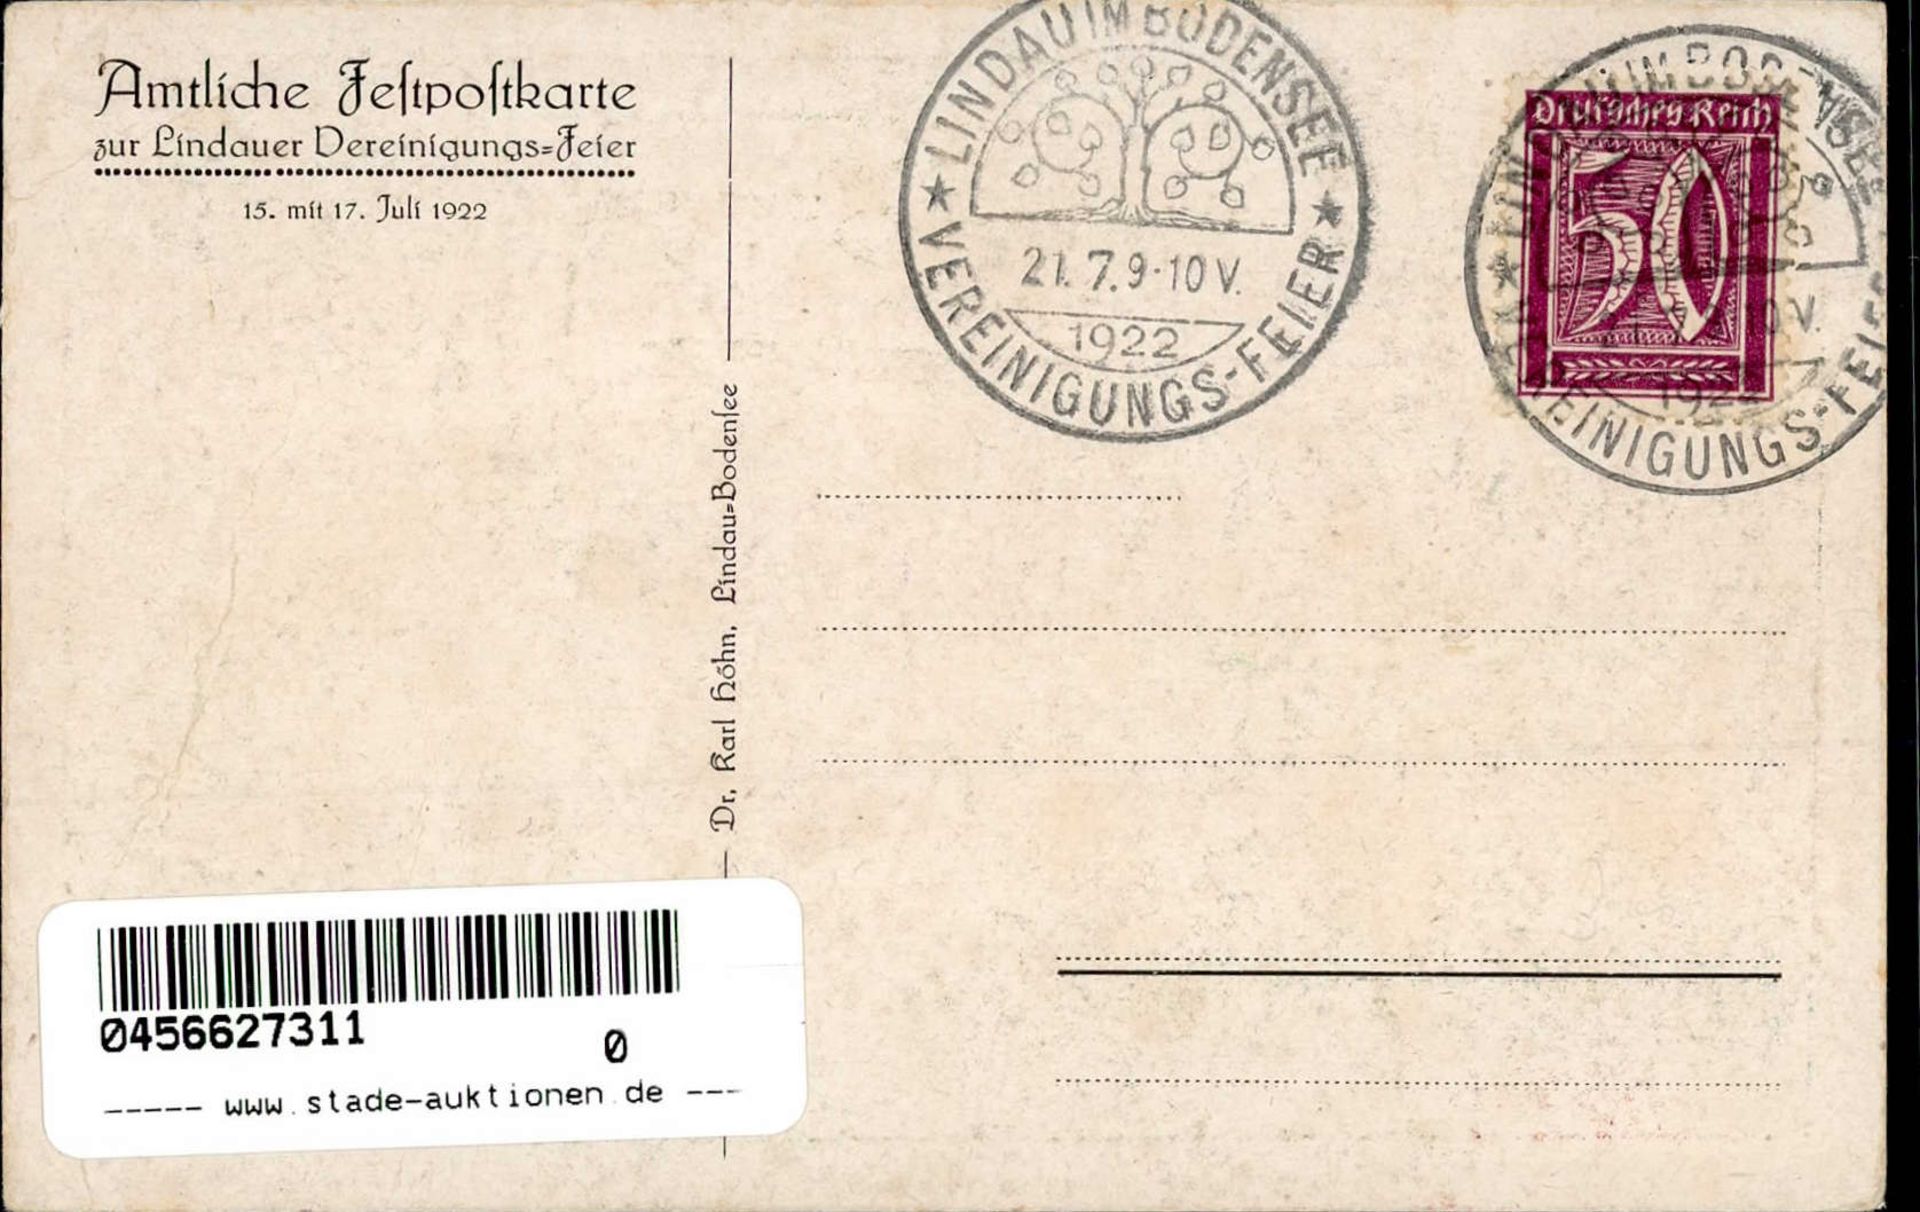 LINDAU,Bodensee - Festpostkarte mit klarem S-o VEREINIGUNGSFEIER 21.7.1922 I-II - Image 2 of 2